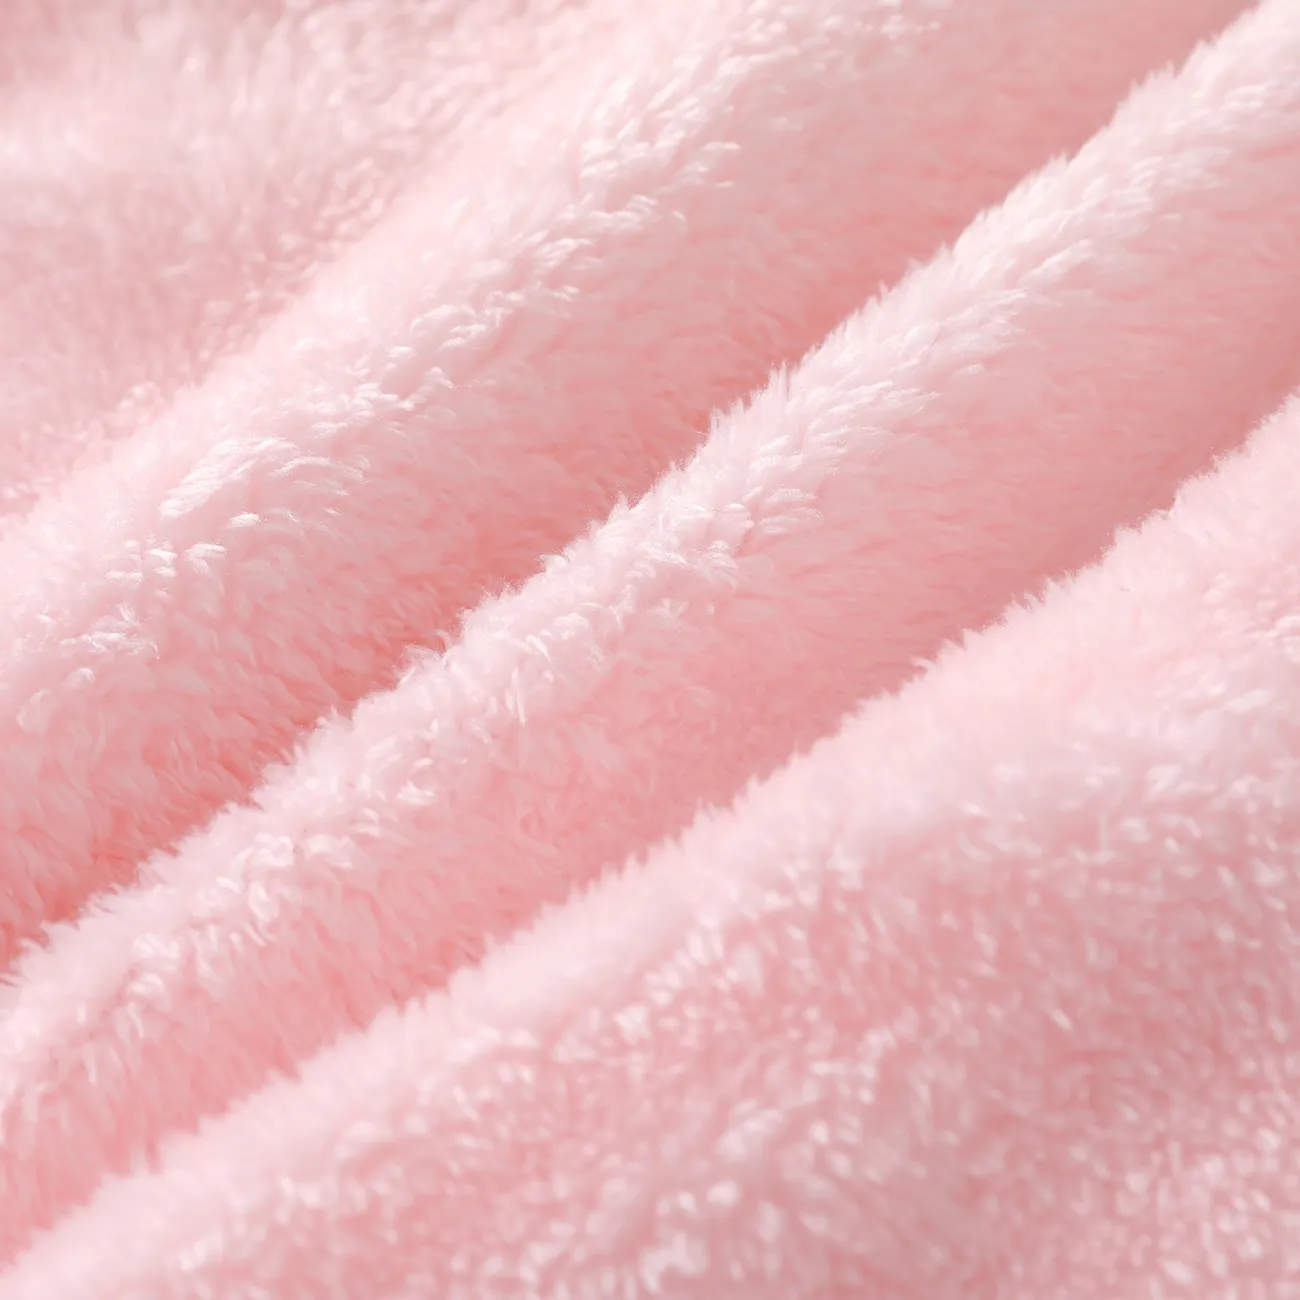 Ostern Baby Unisex Mit Kapuze Hase Süß Langärmelig Baby-Overalls rosa big image 1